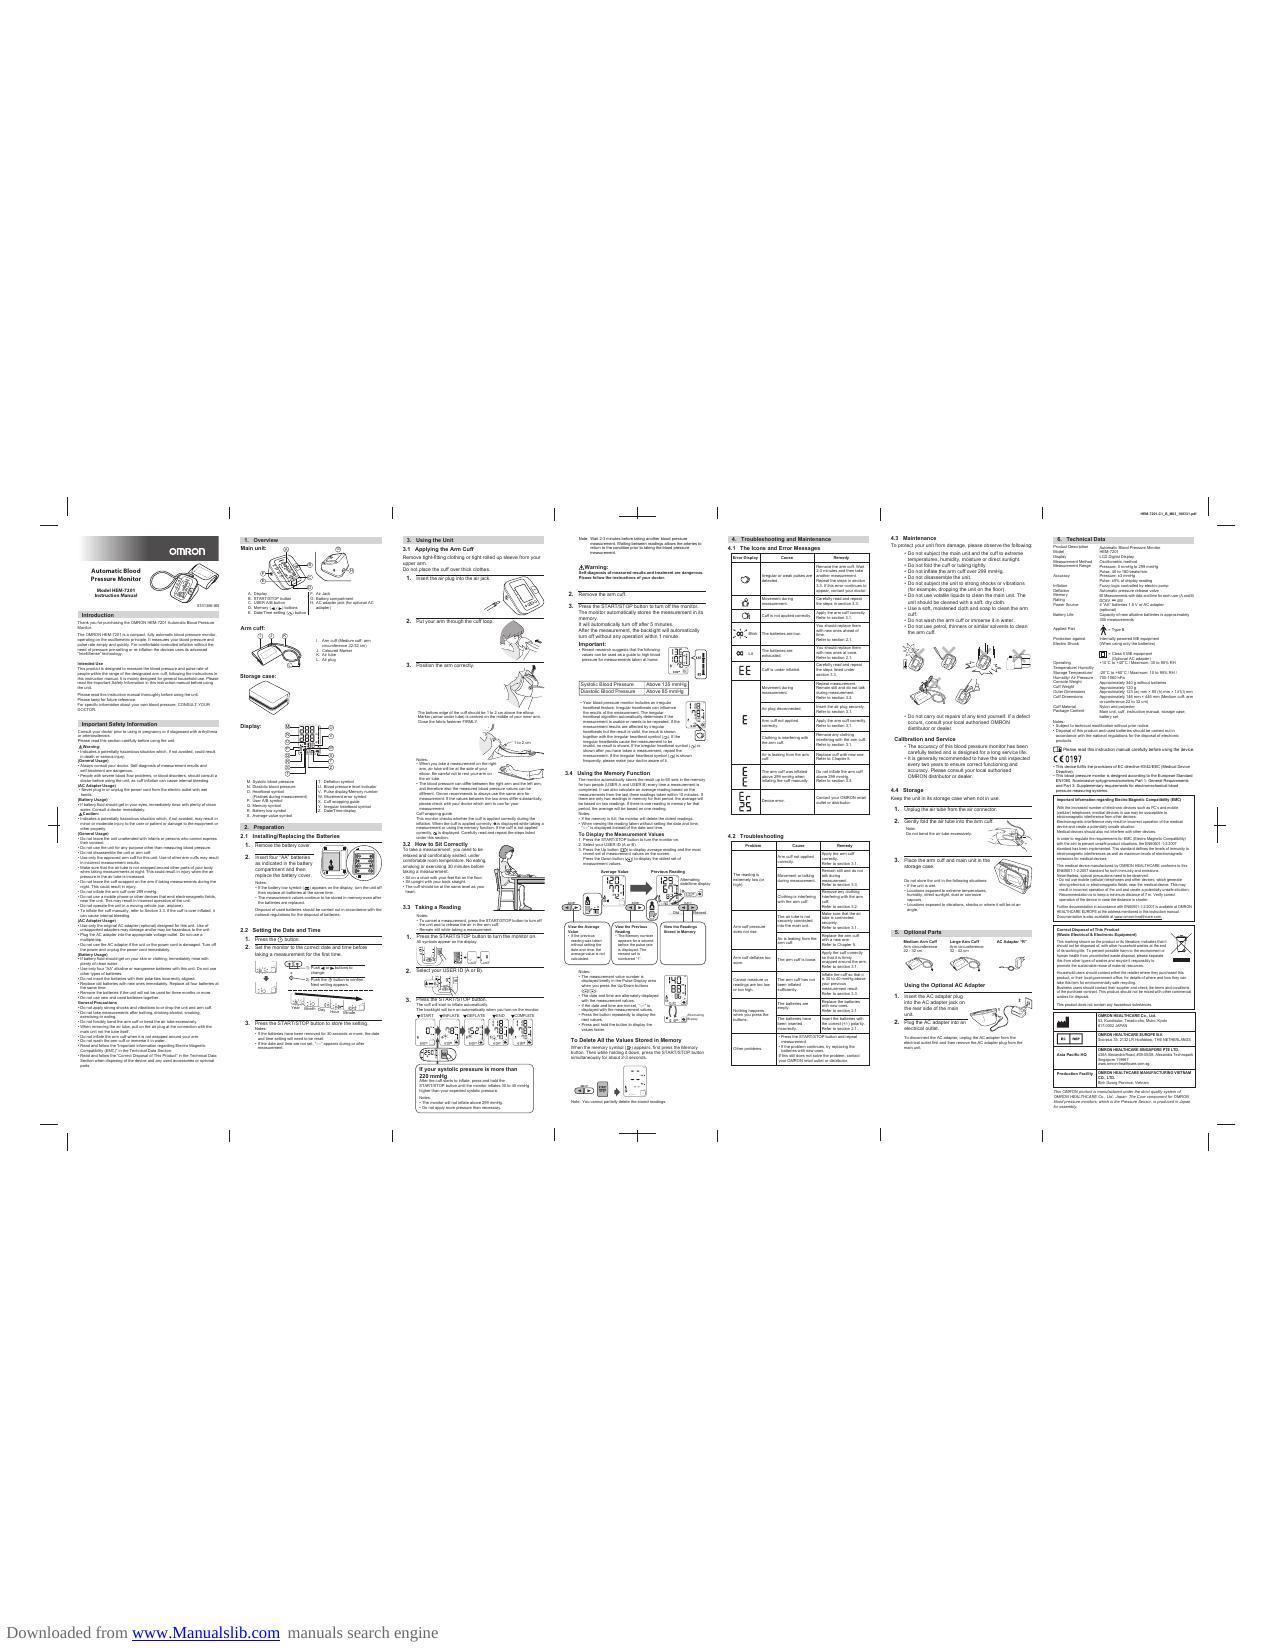 omron-mate-biao-frebl-inilar-user-manual.pdf